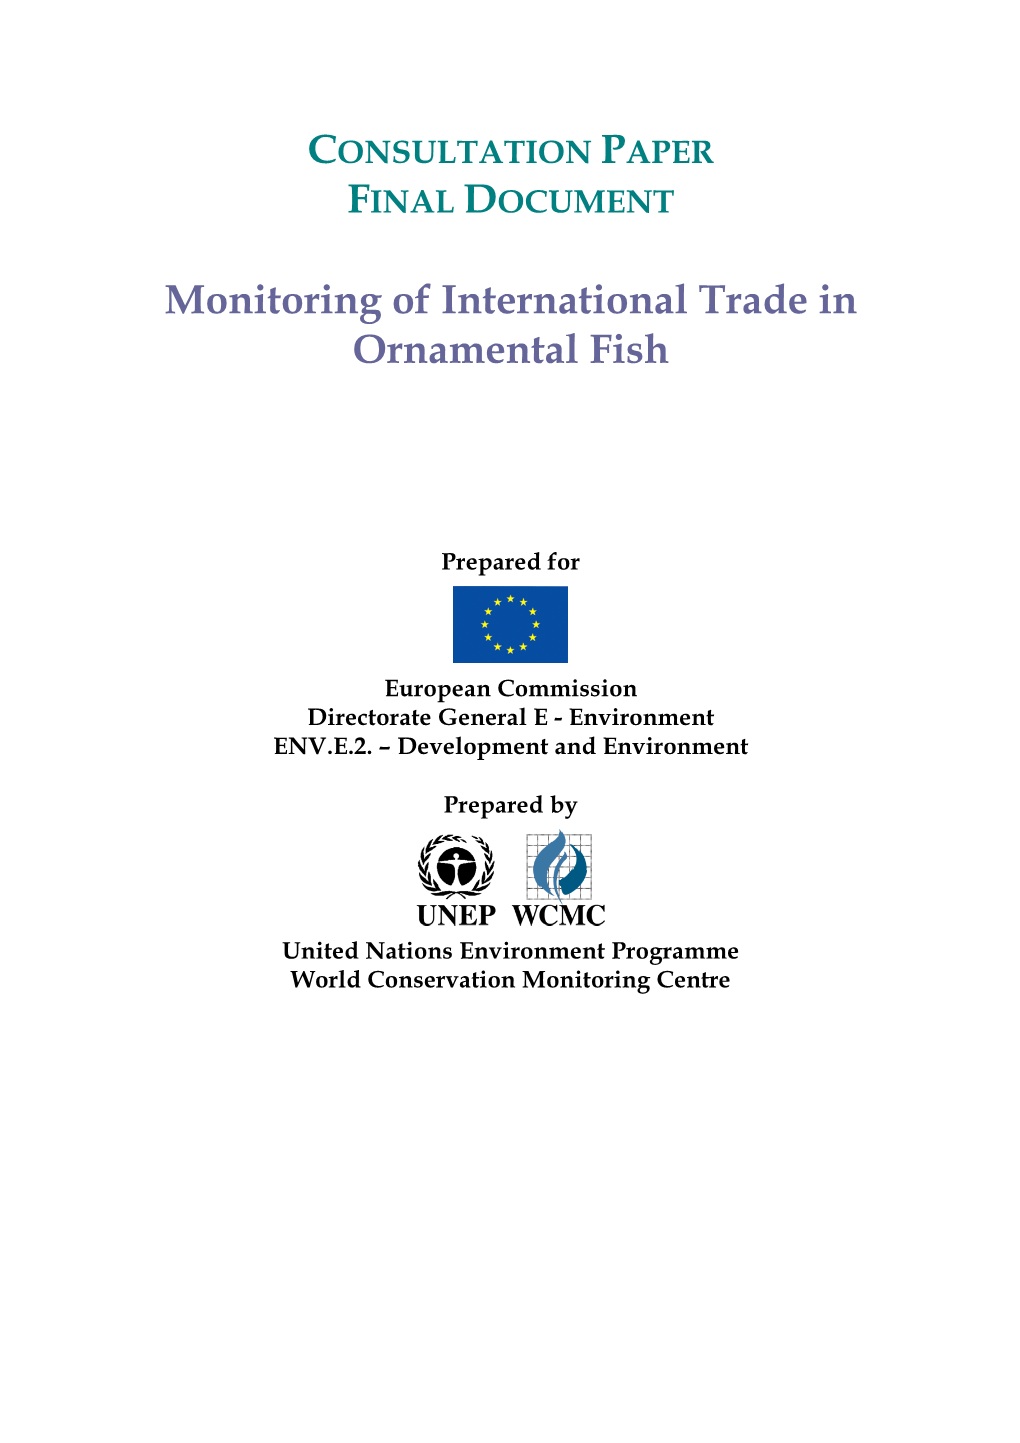 Monitoring of International Trade in Ornamental Fish